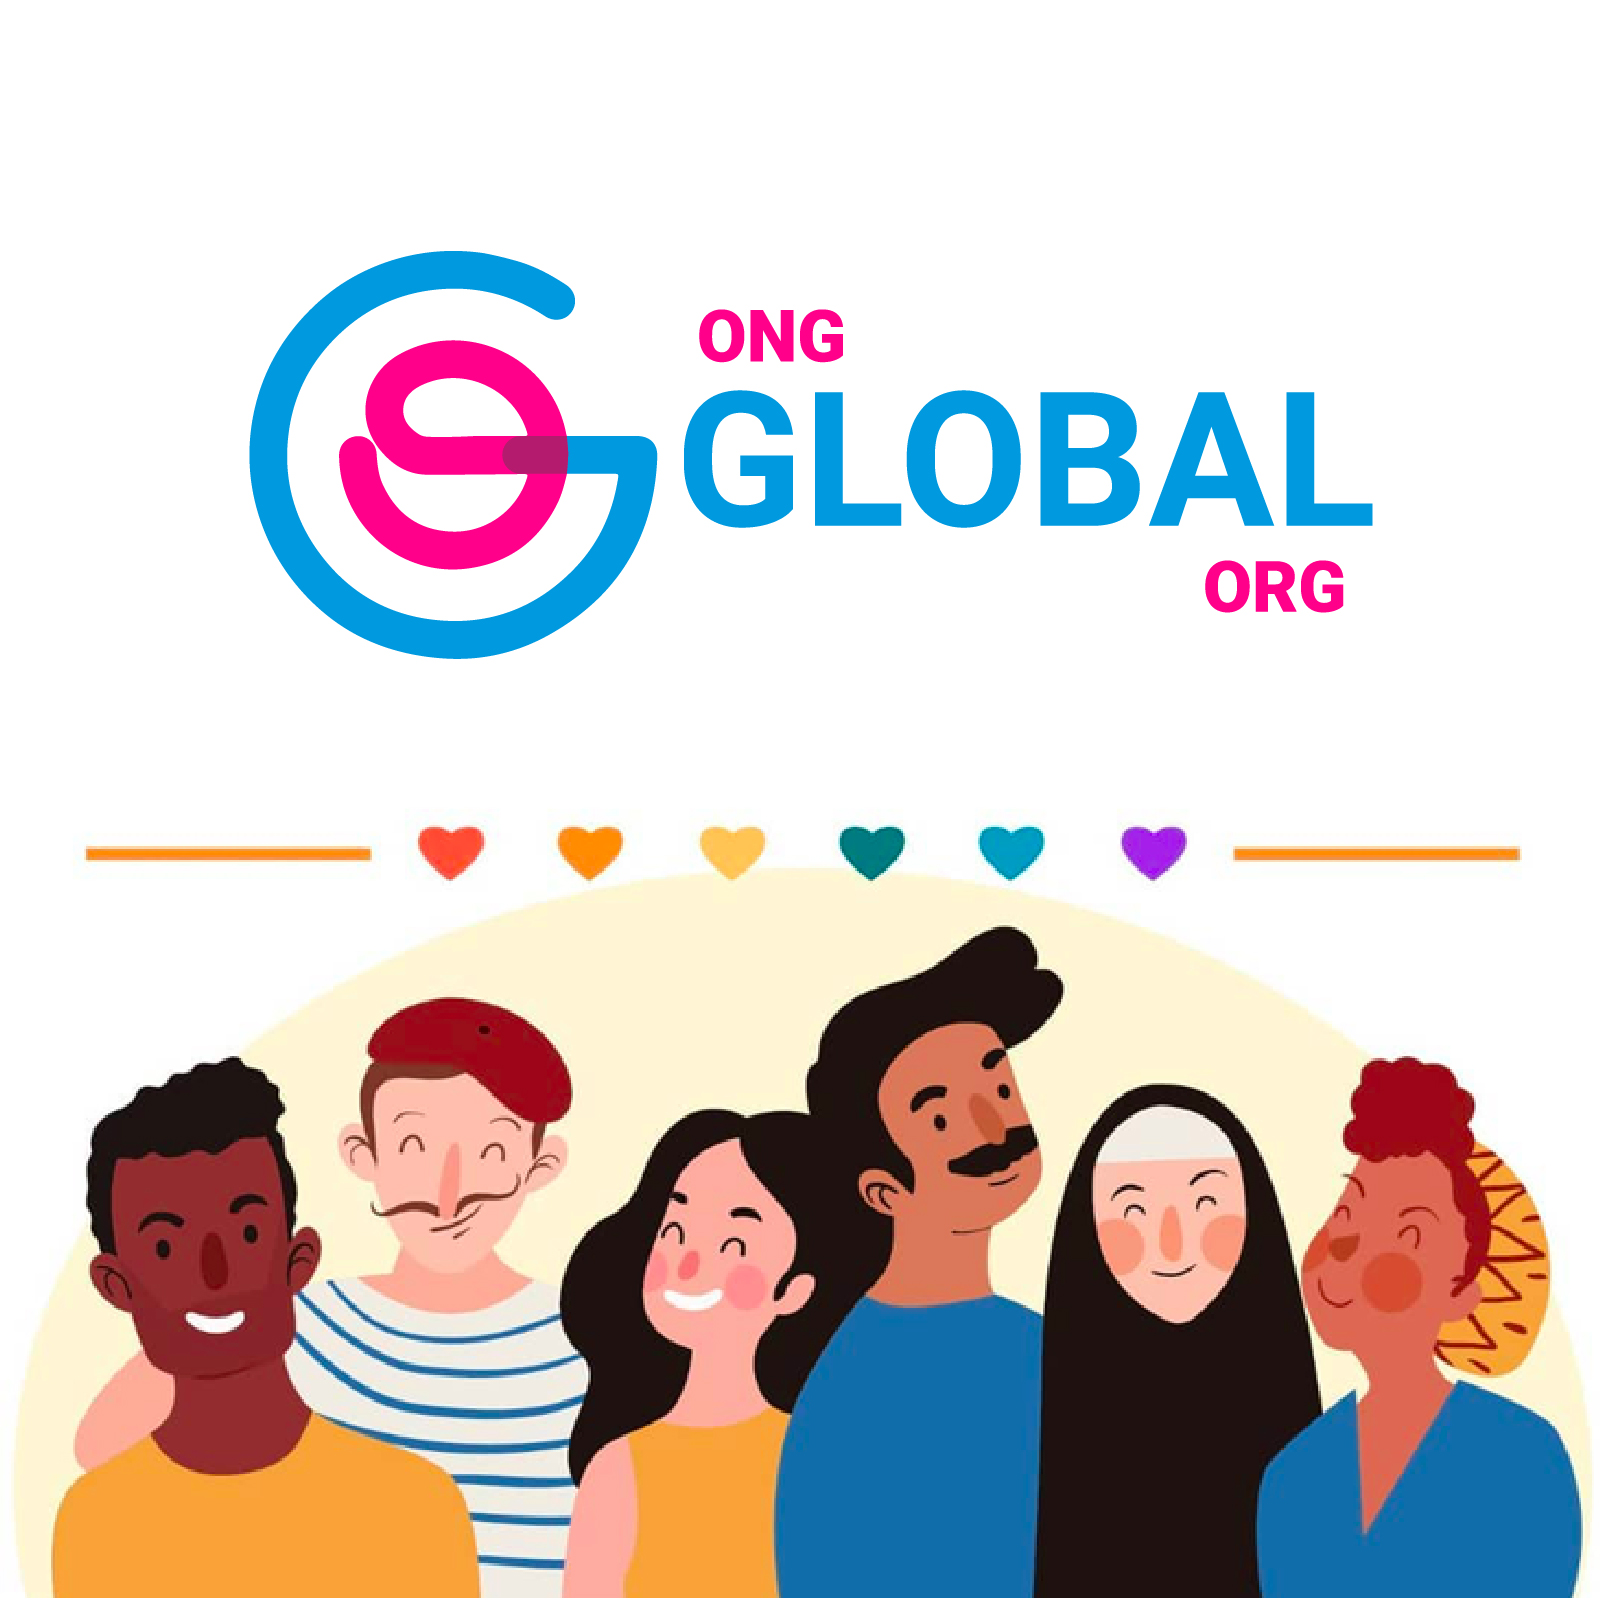 Equipe ONG Global ORG